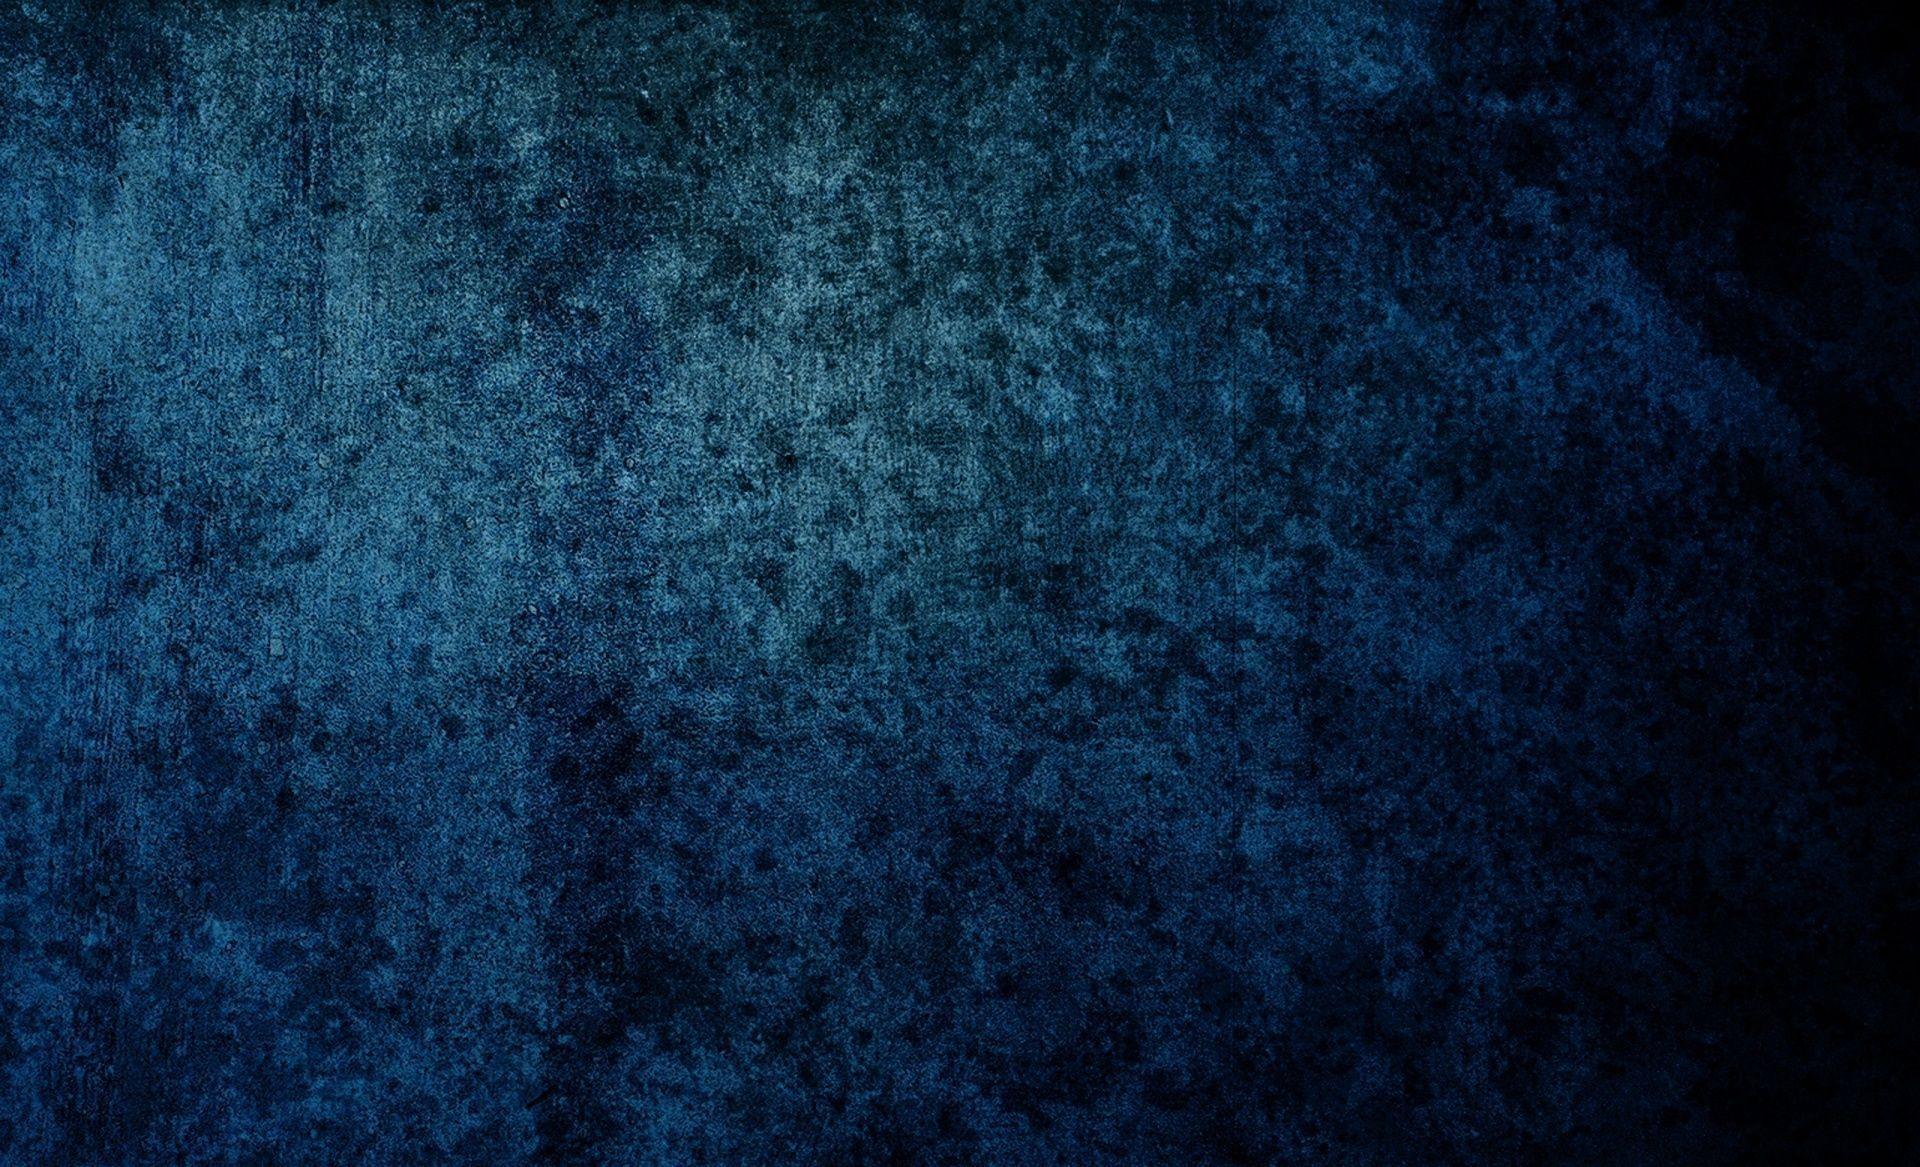 4000 Dark Blue Grunge Background Illustrations RoyaltyFree Vector  Graphics  Clip Art  iStock  Light house Dark blue background